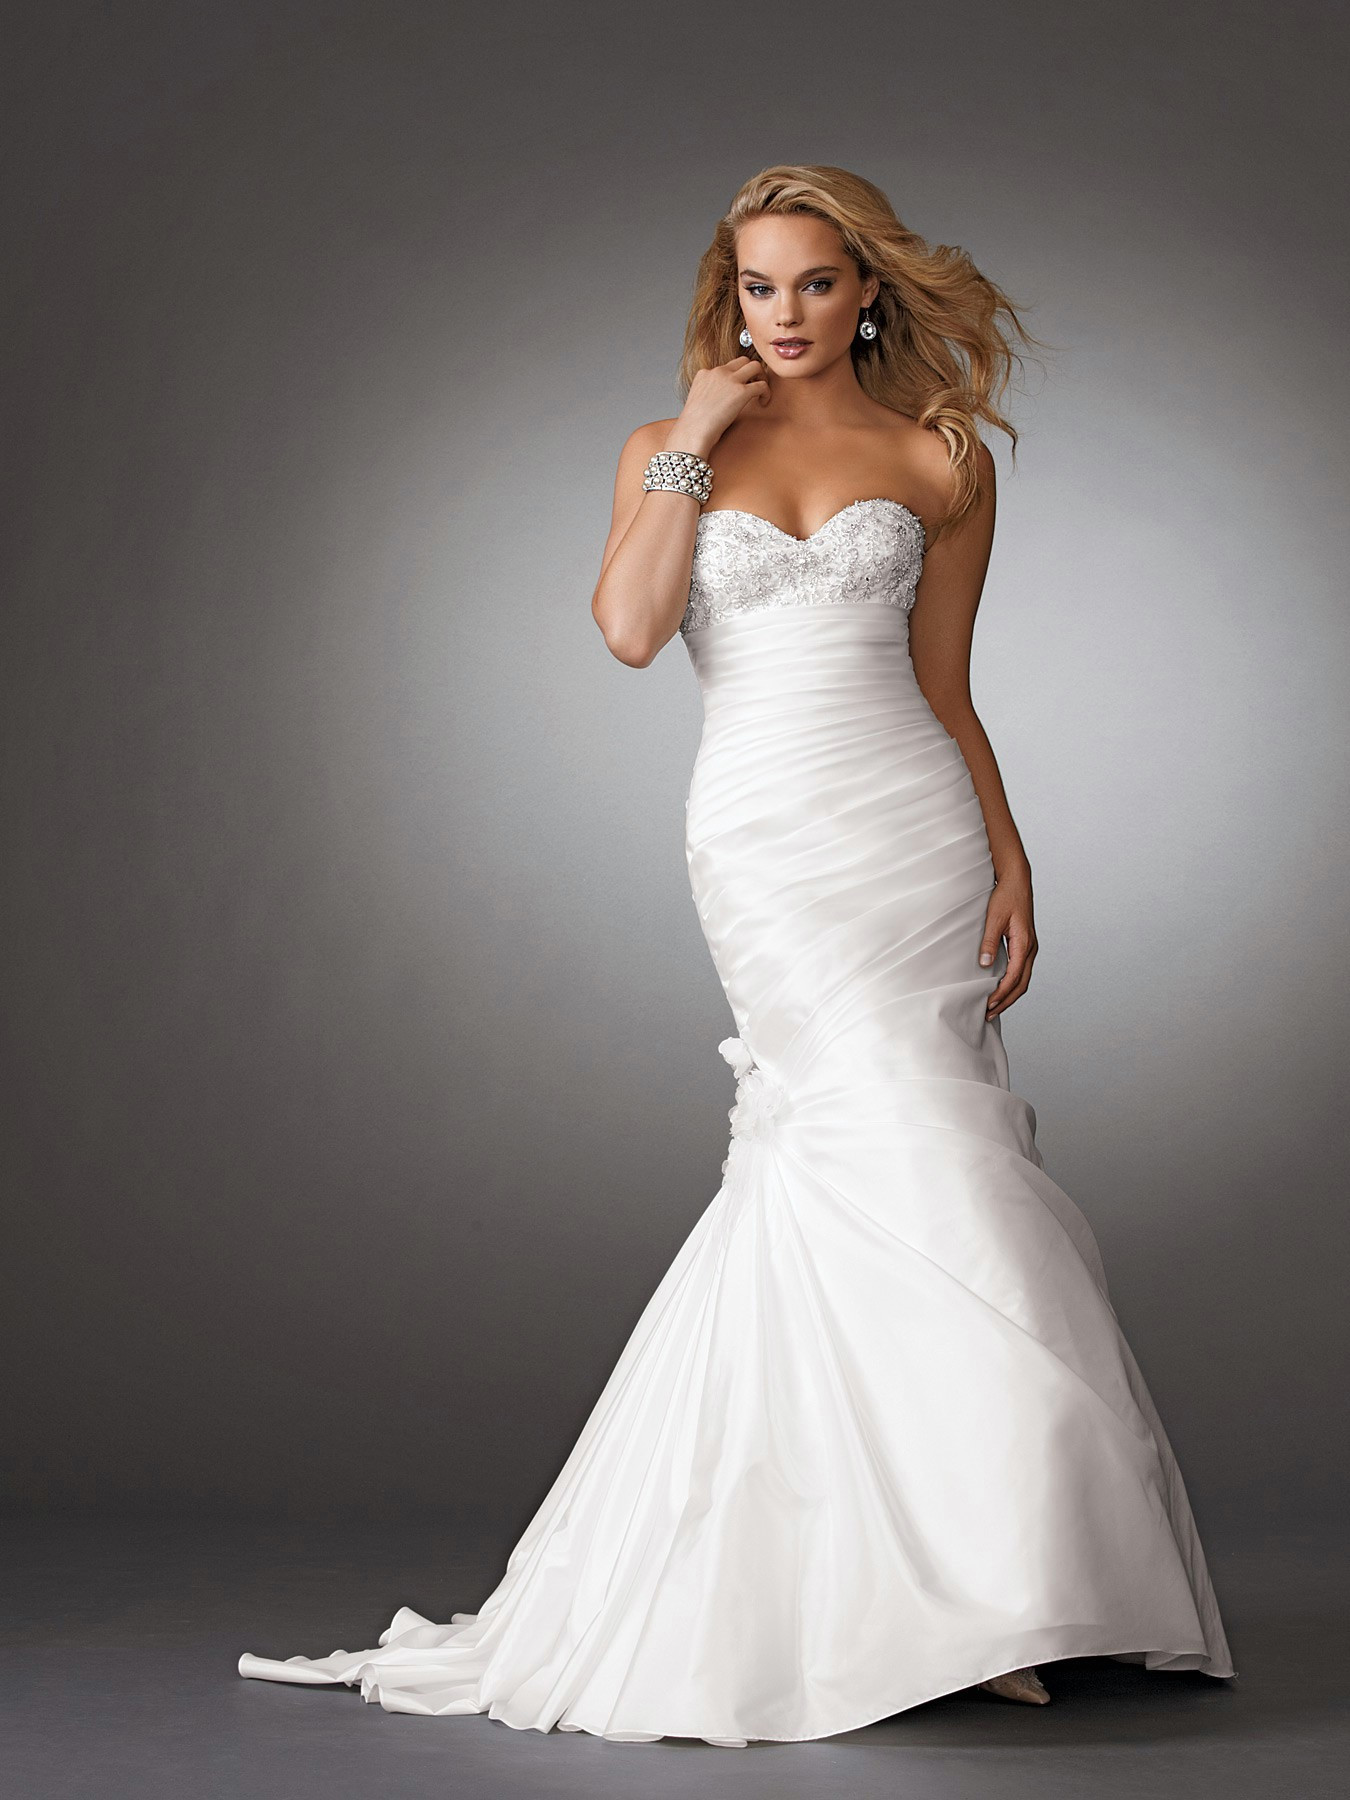 Mermaid Dress Wedding
 Mermaid Wedding Dresses – An Elegant Choice For Brides